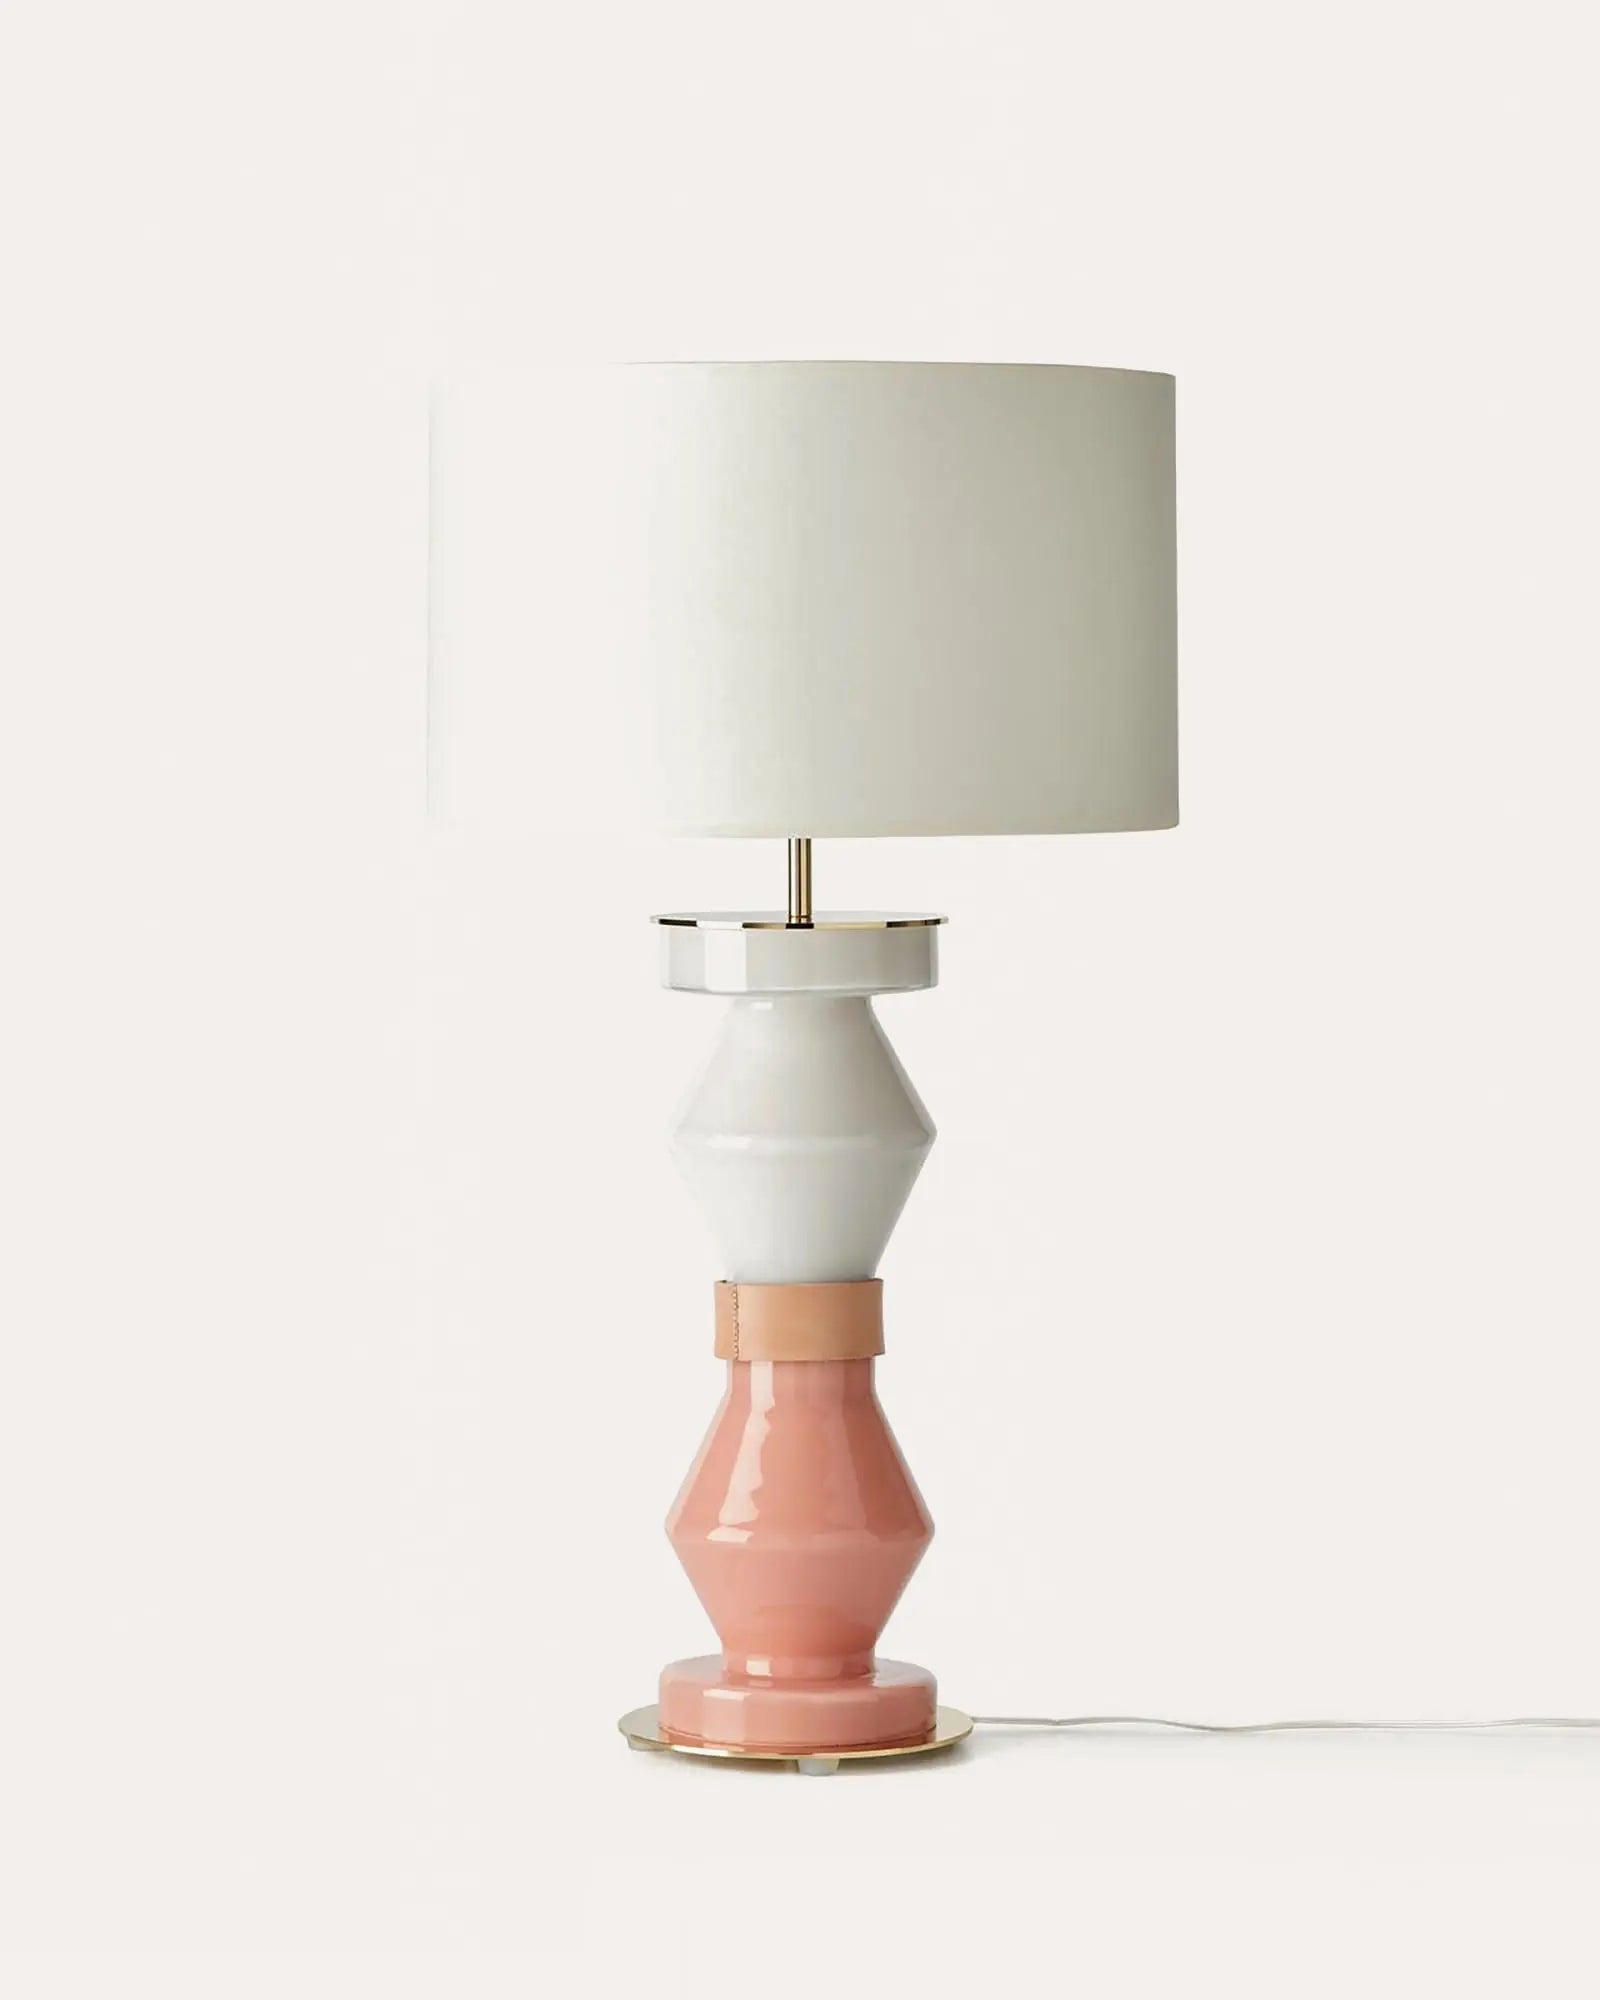 Kitta Kitta contemporary decorative table lamp in ceramic and fabric shade